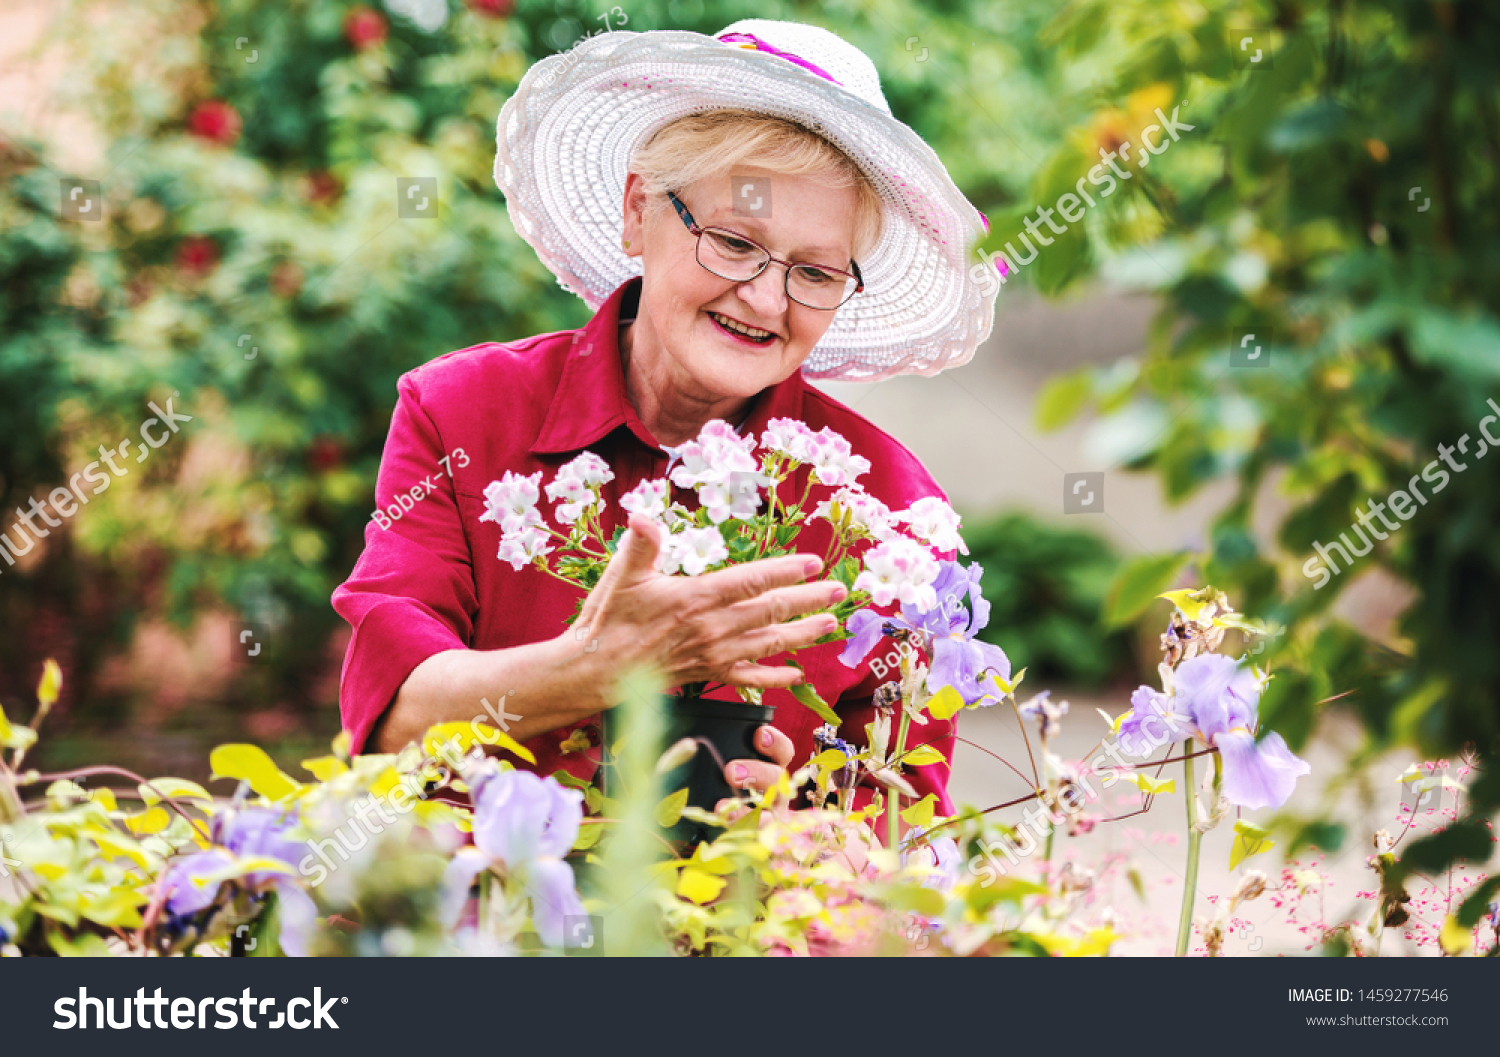 Gardening. Senior woman enjoying in her garden with flowers. Hobbies and leisure #1459277546